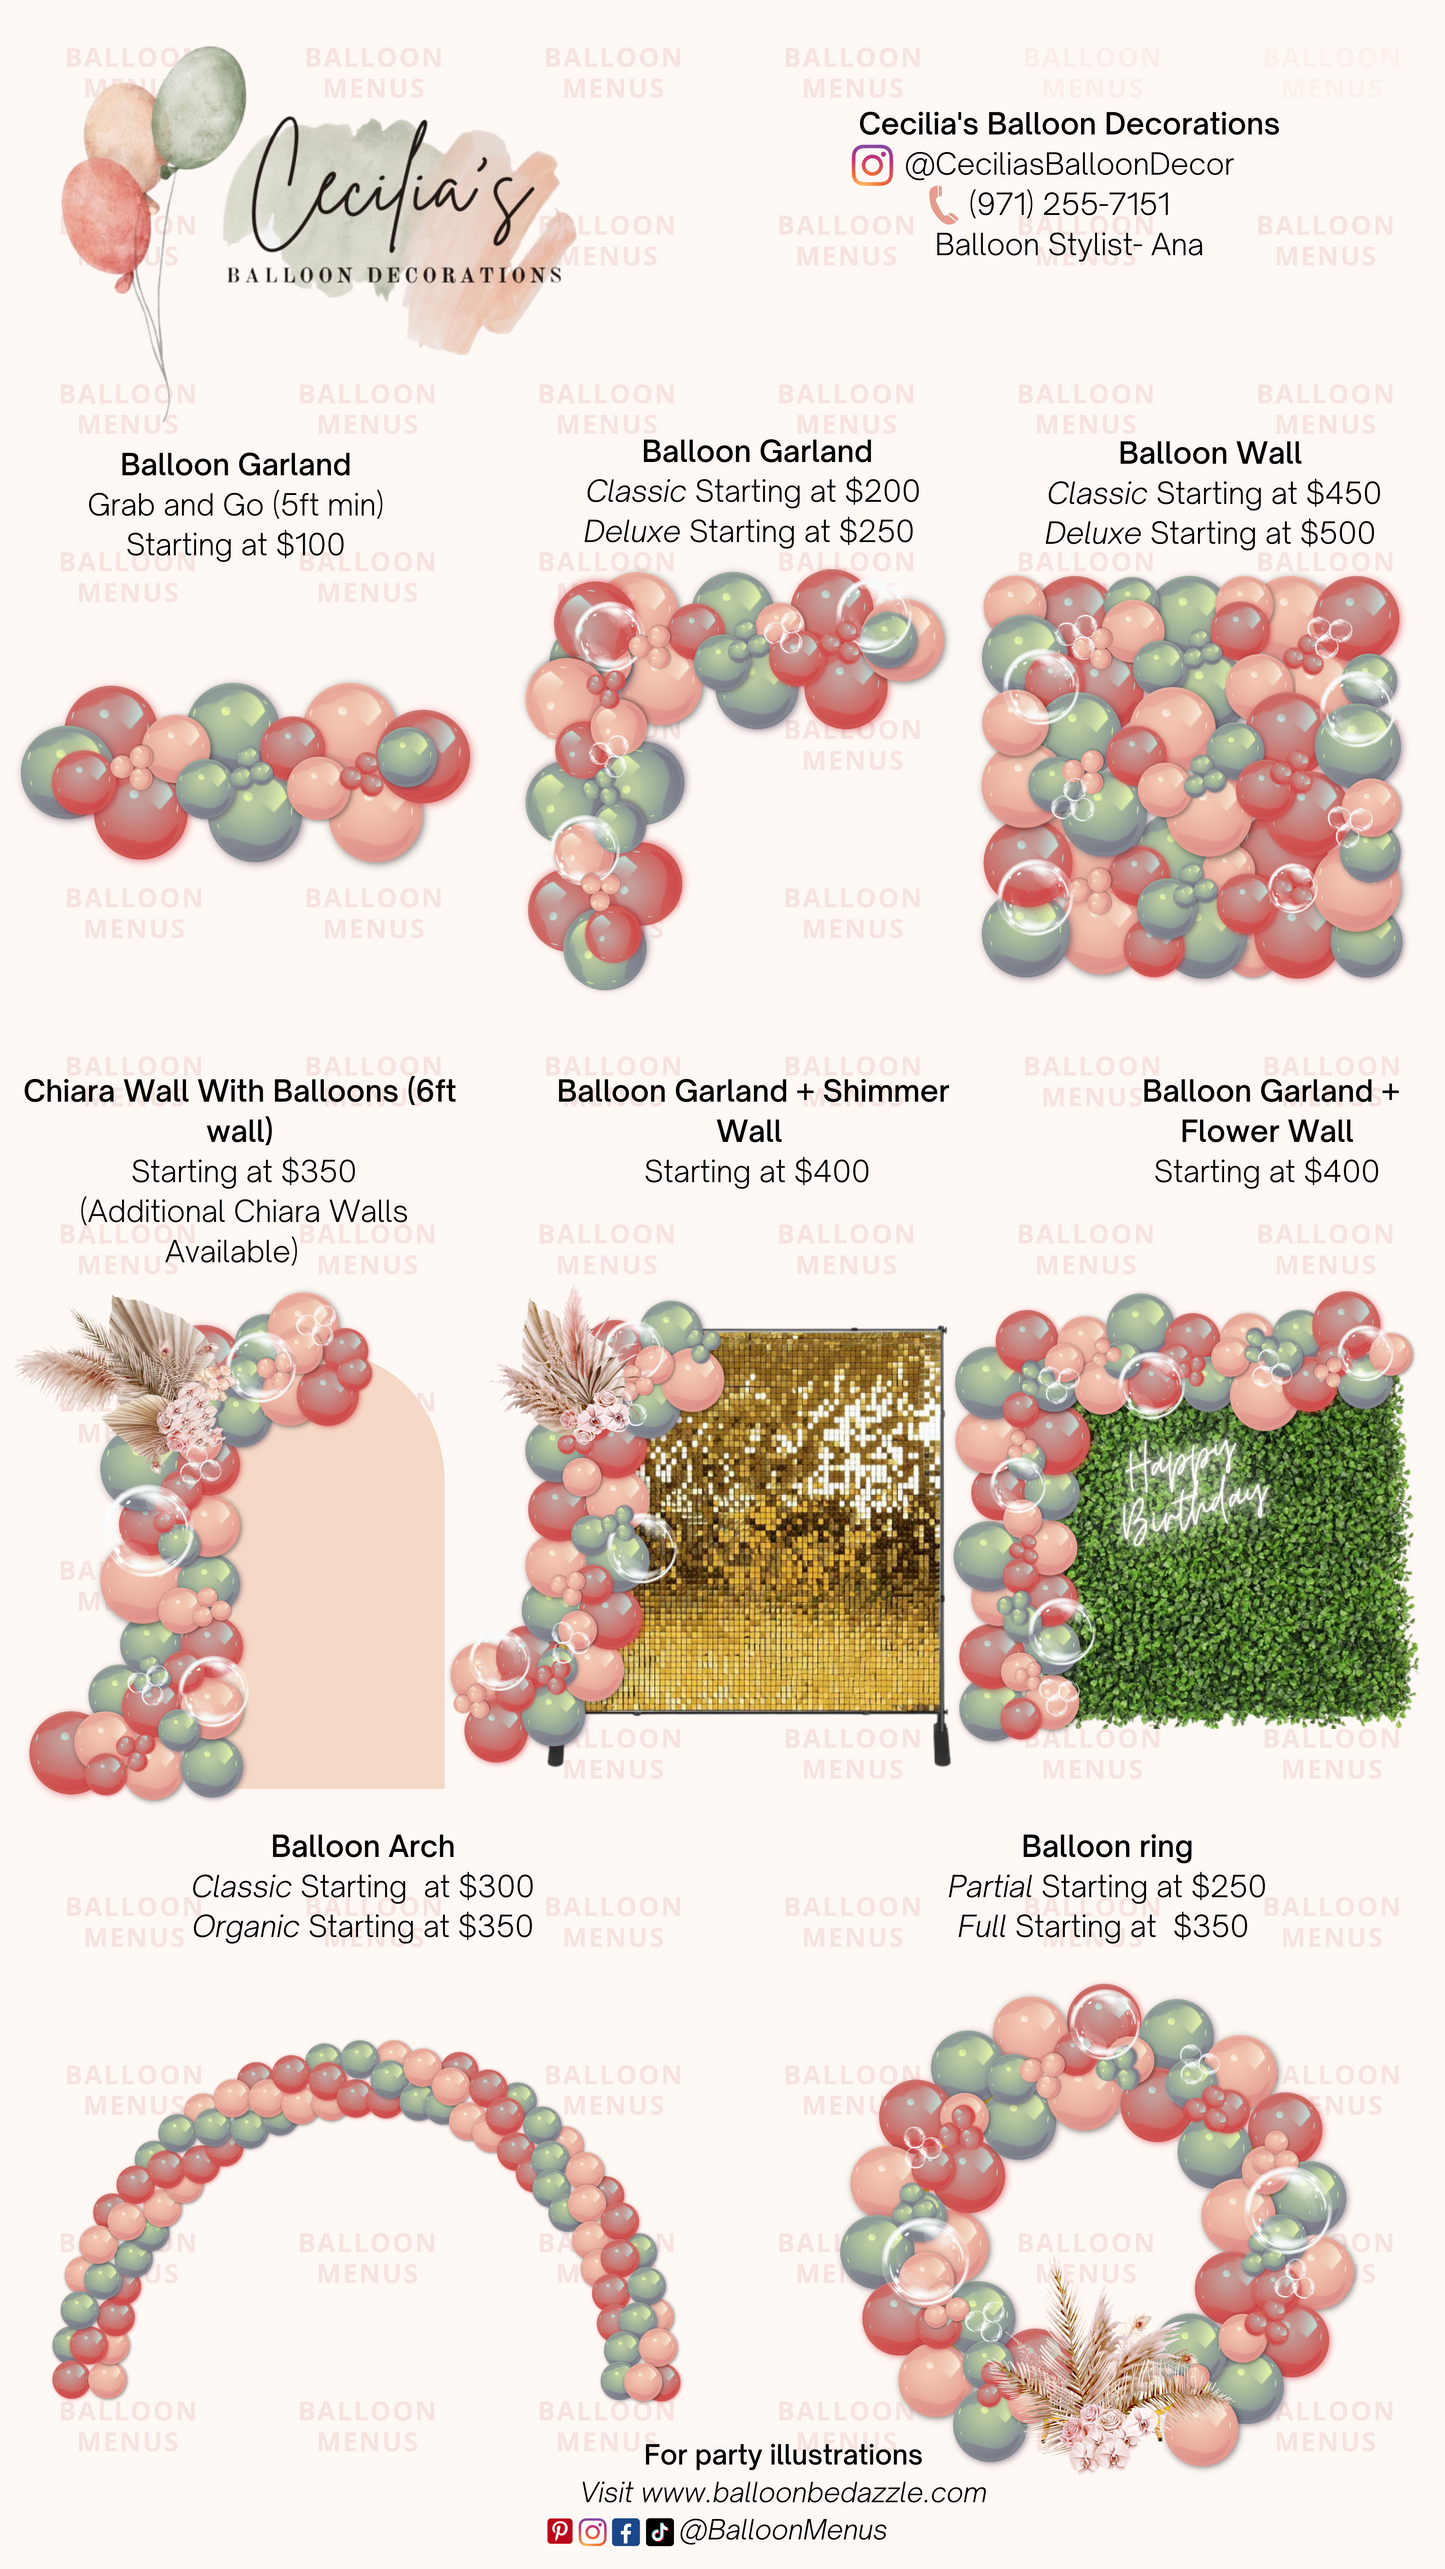 Cecilia’s Balloon Decorations  - Client Balloon Menu